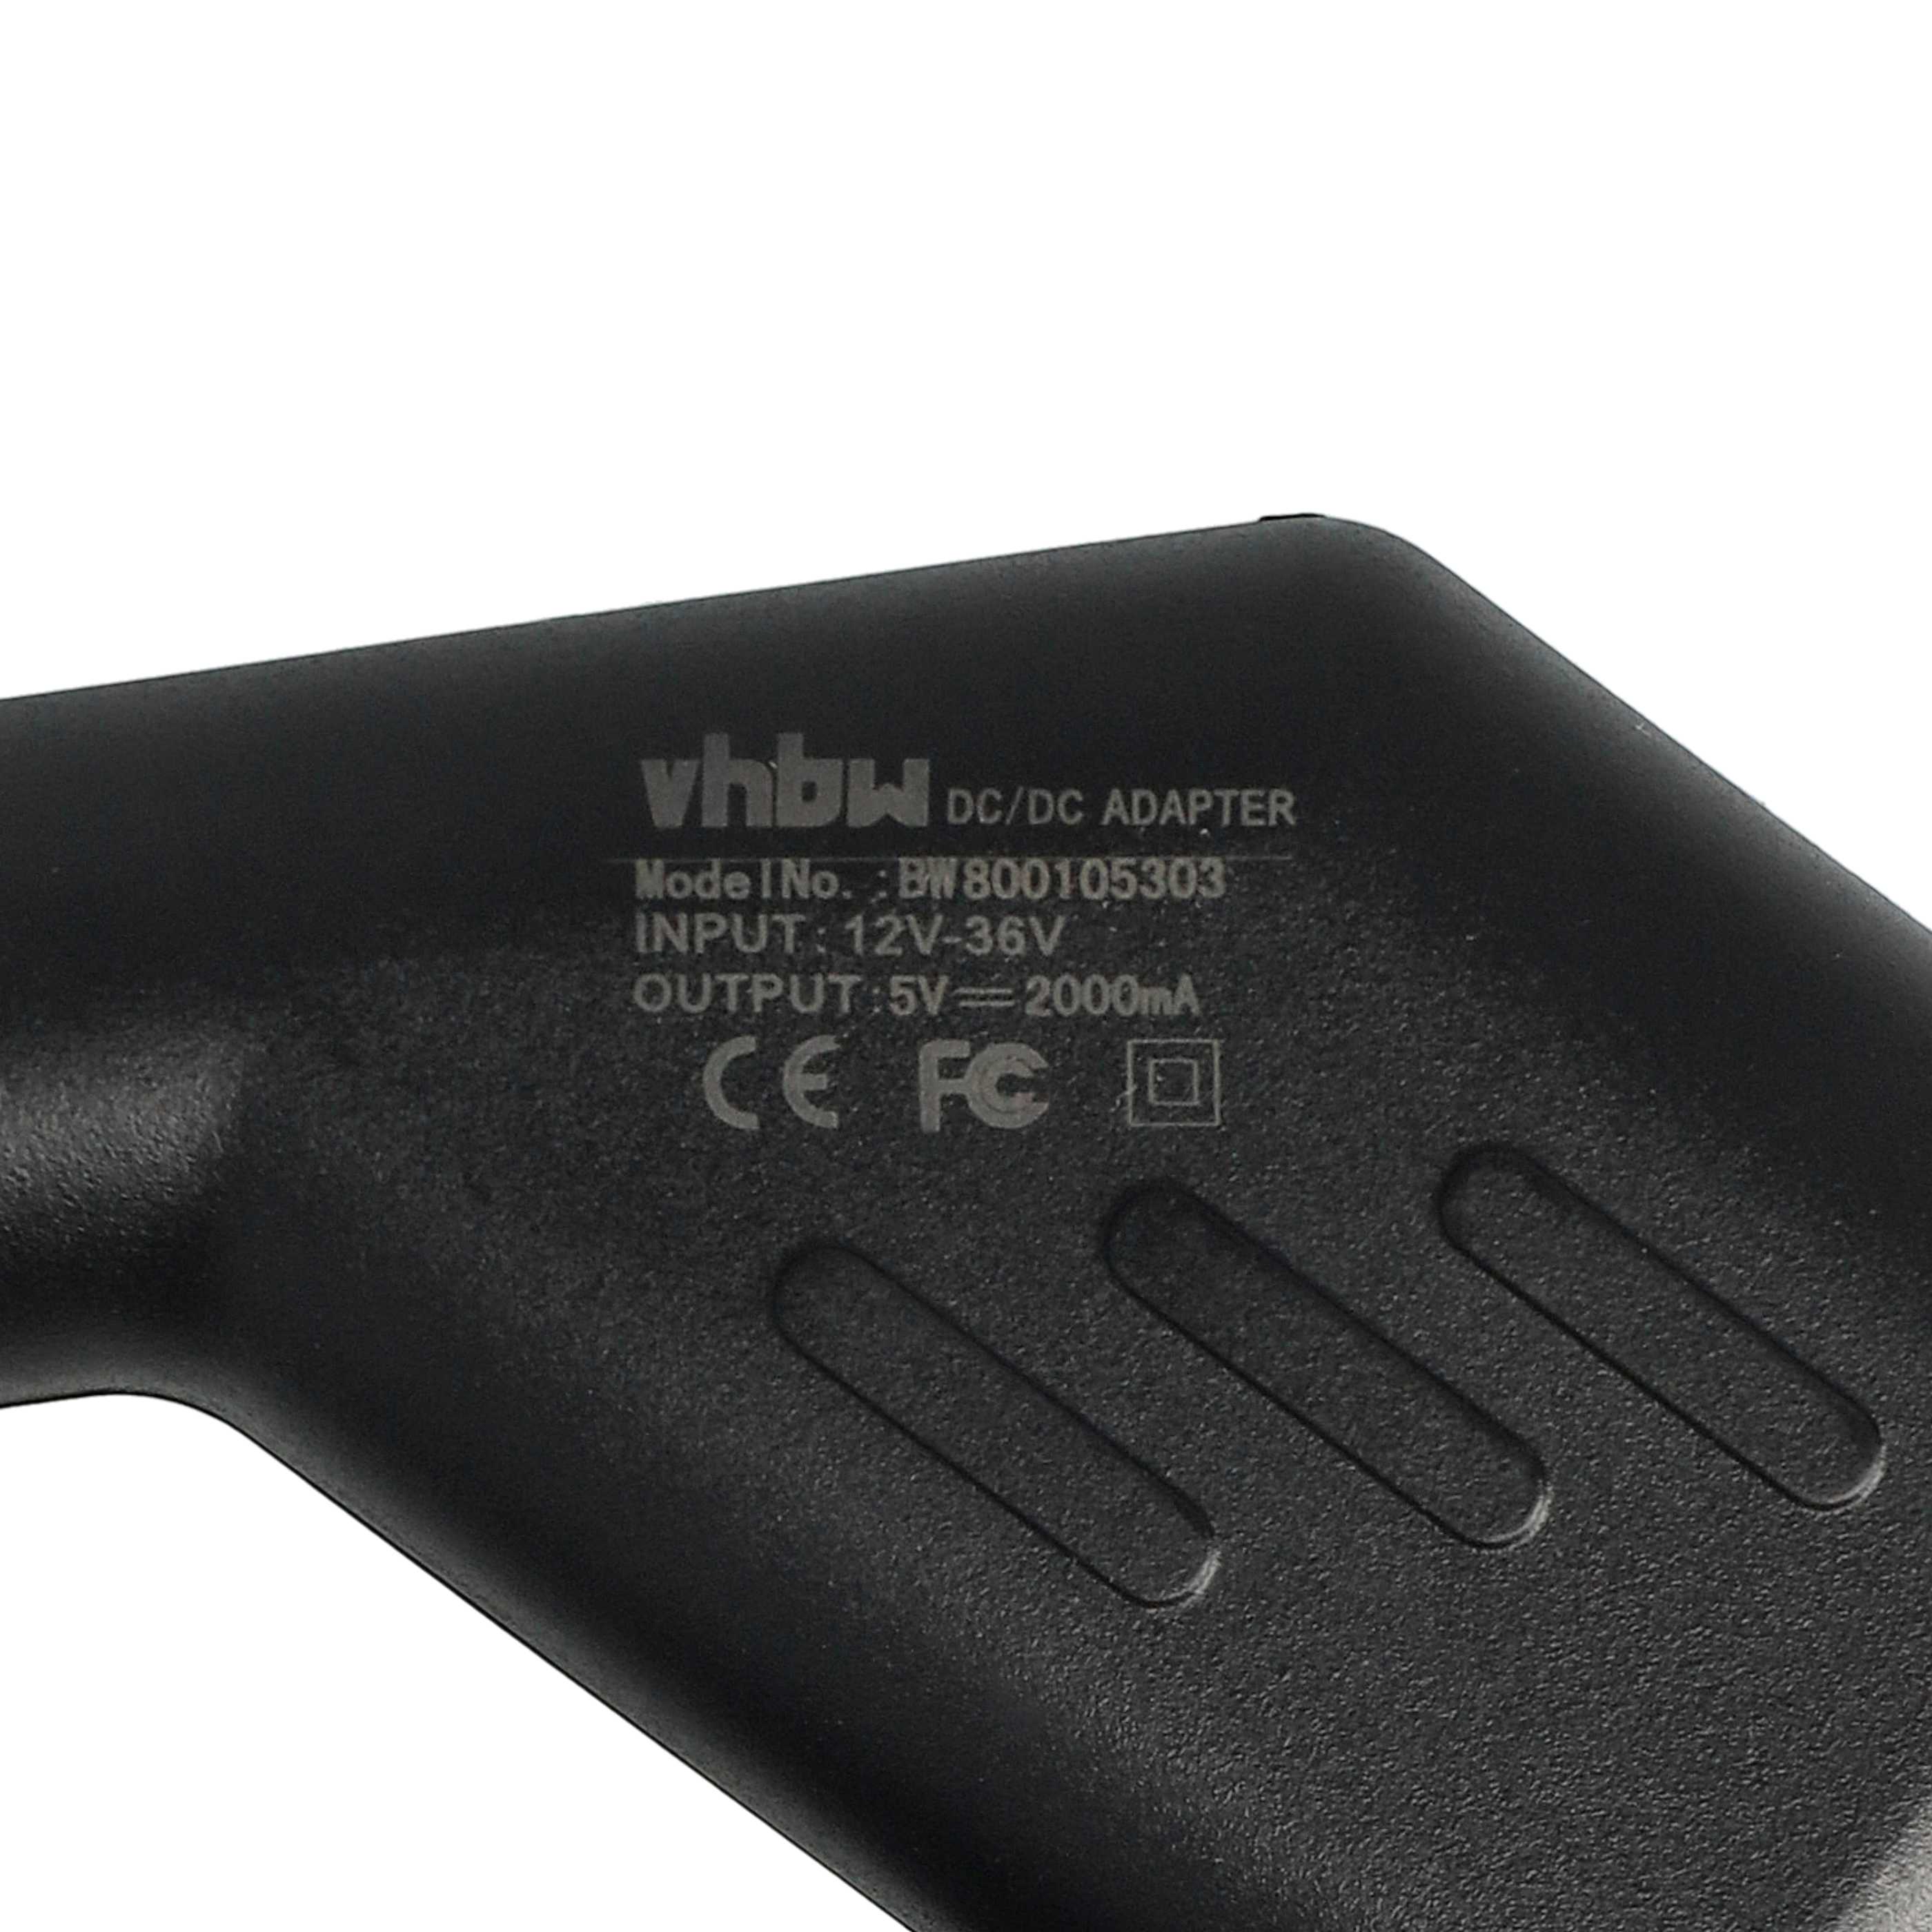 Mini-USB Autoladekabel 2,0 A passend für Geräte wie GPS, Navi - Ladekabel